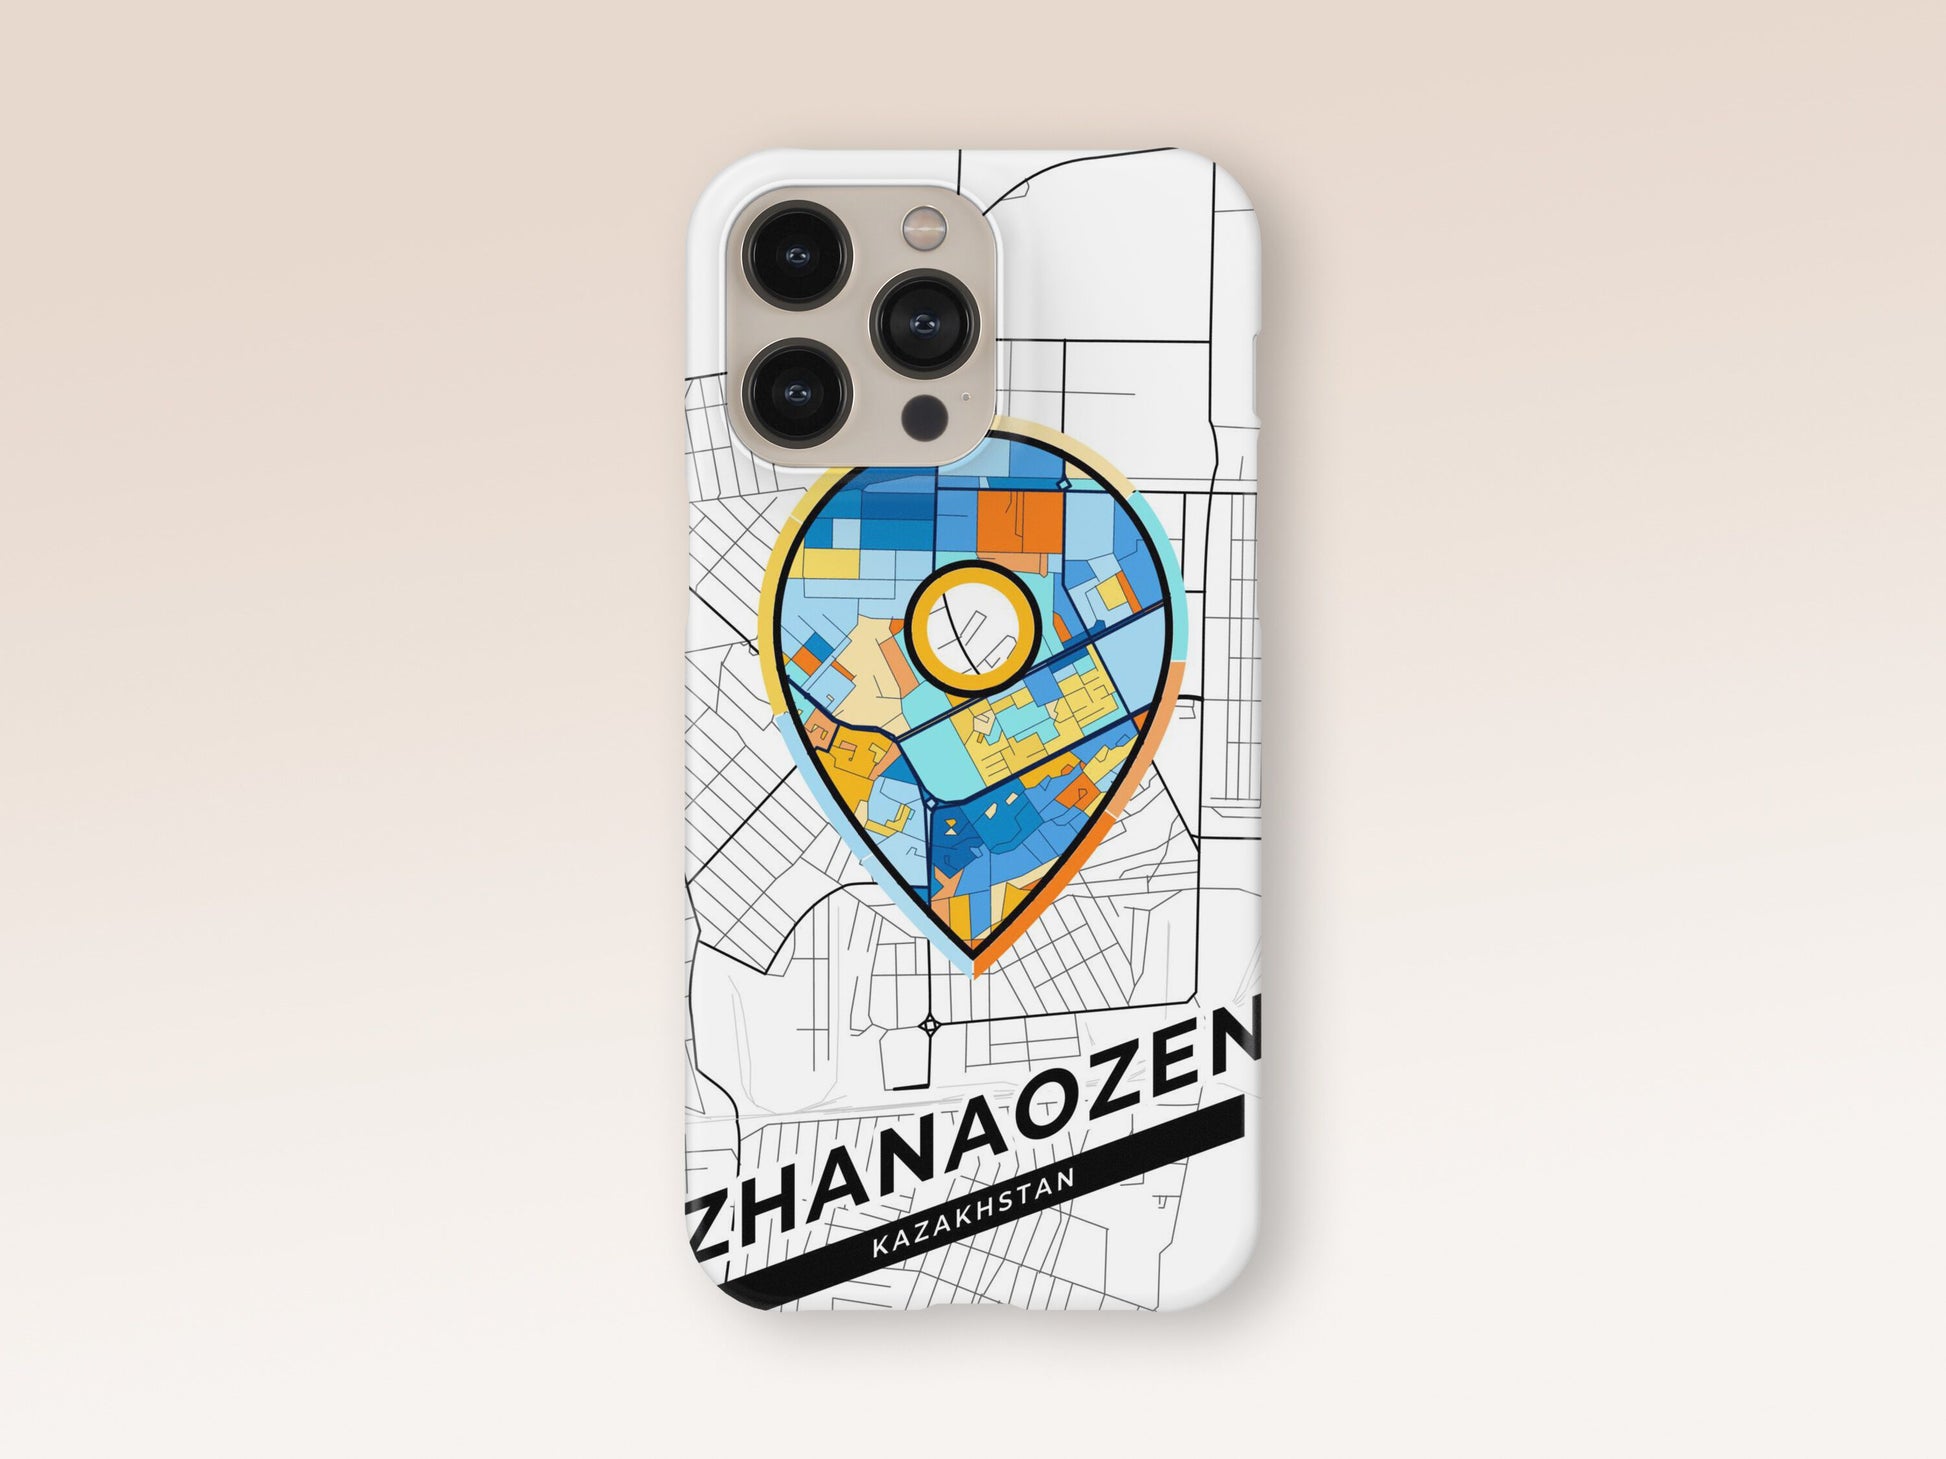 Zhanaozen Kazakhstan slim phone case with colorful icon 1